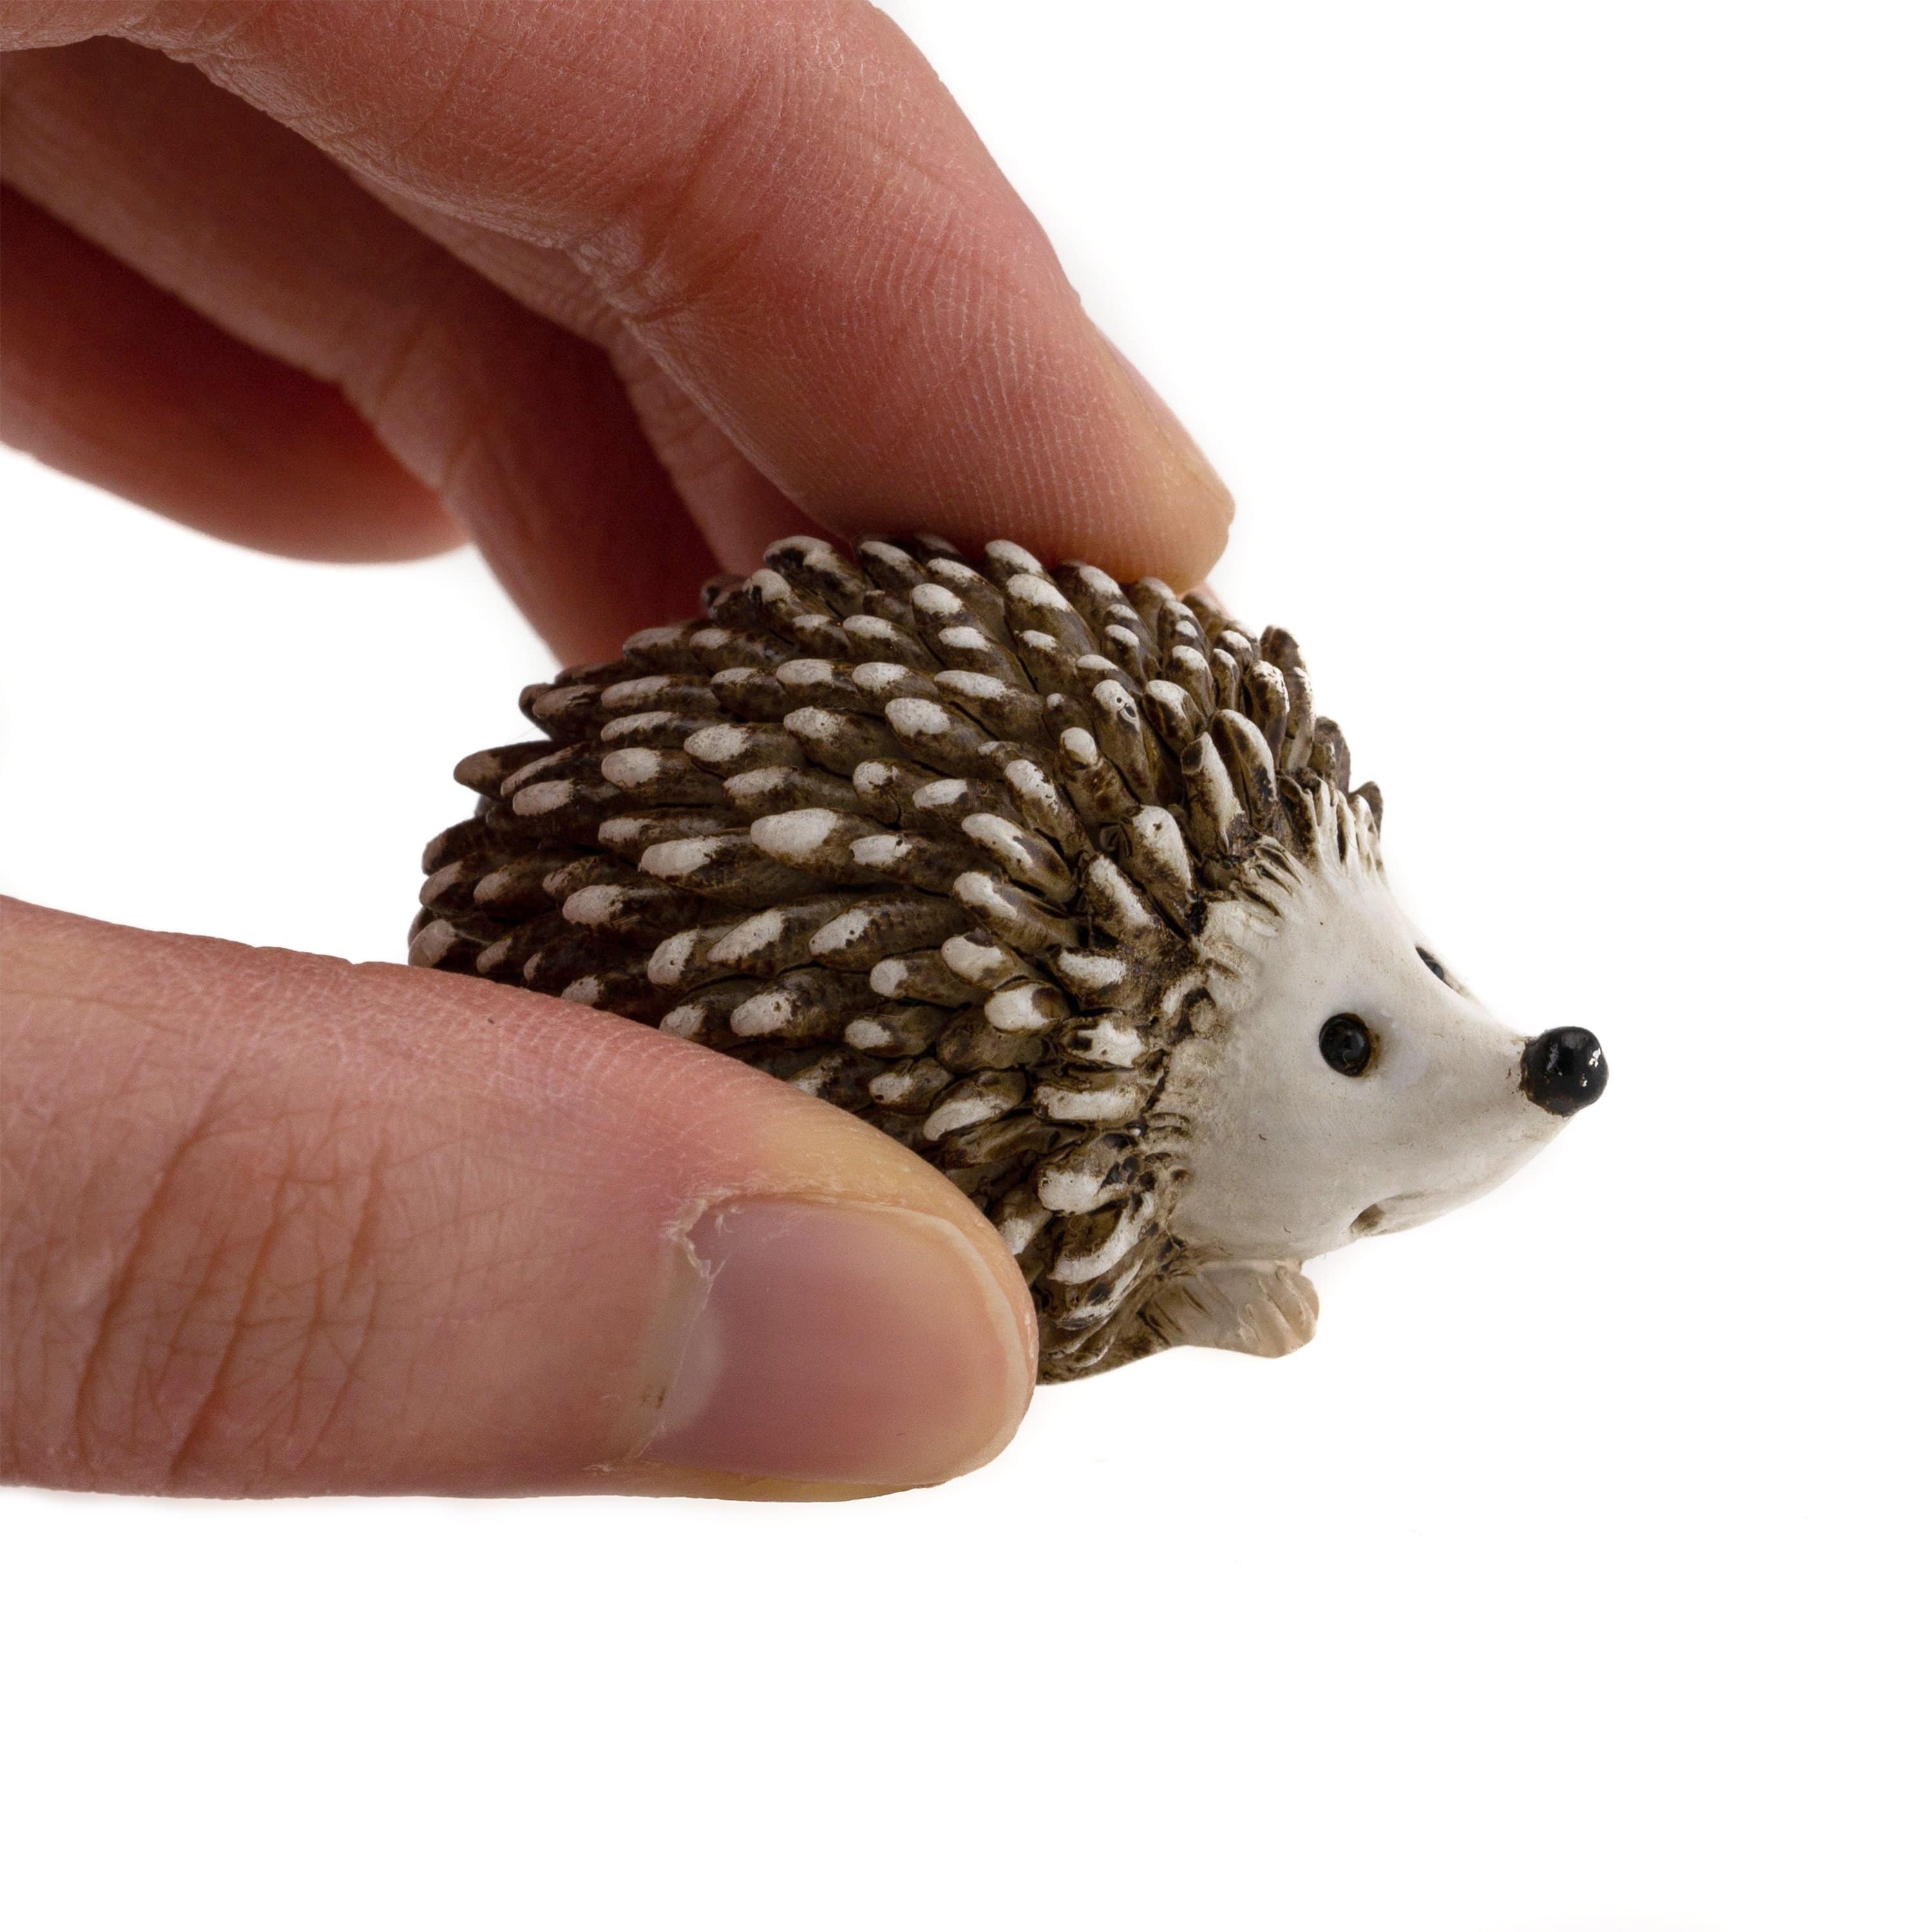 Cute Mini Hedgehog, Fairy Garden, Mini Hedgehog, Miniature Hedgehog - Mini Fairy Garden World